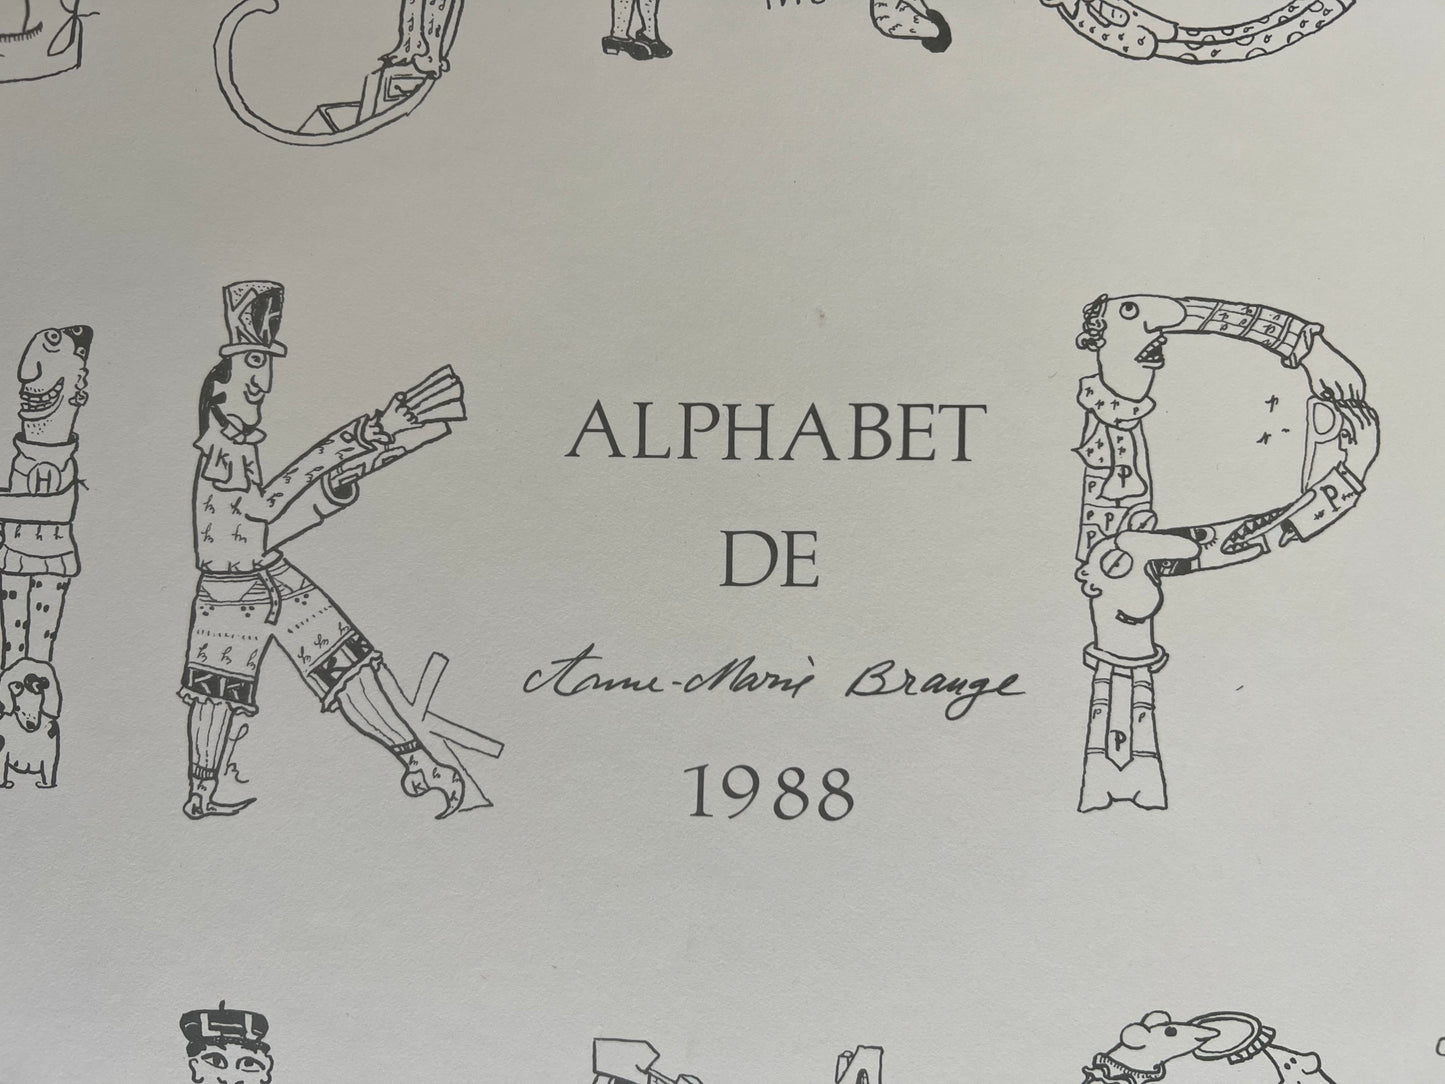 Anne-Marie Brauge. "Alphabet de Anne-Marie Brauge", 1988